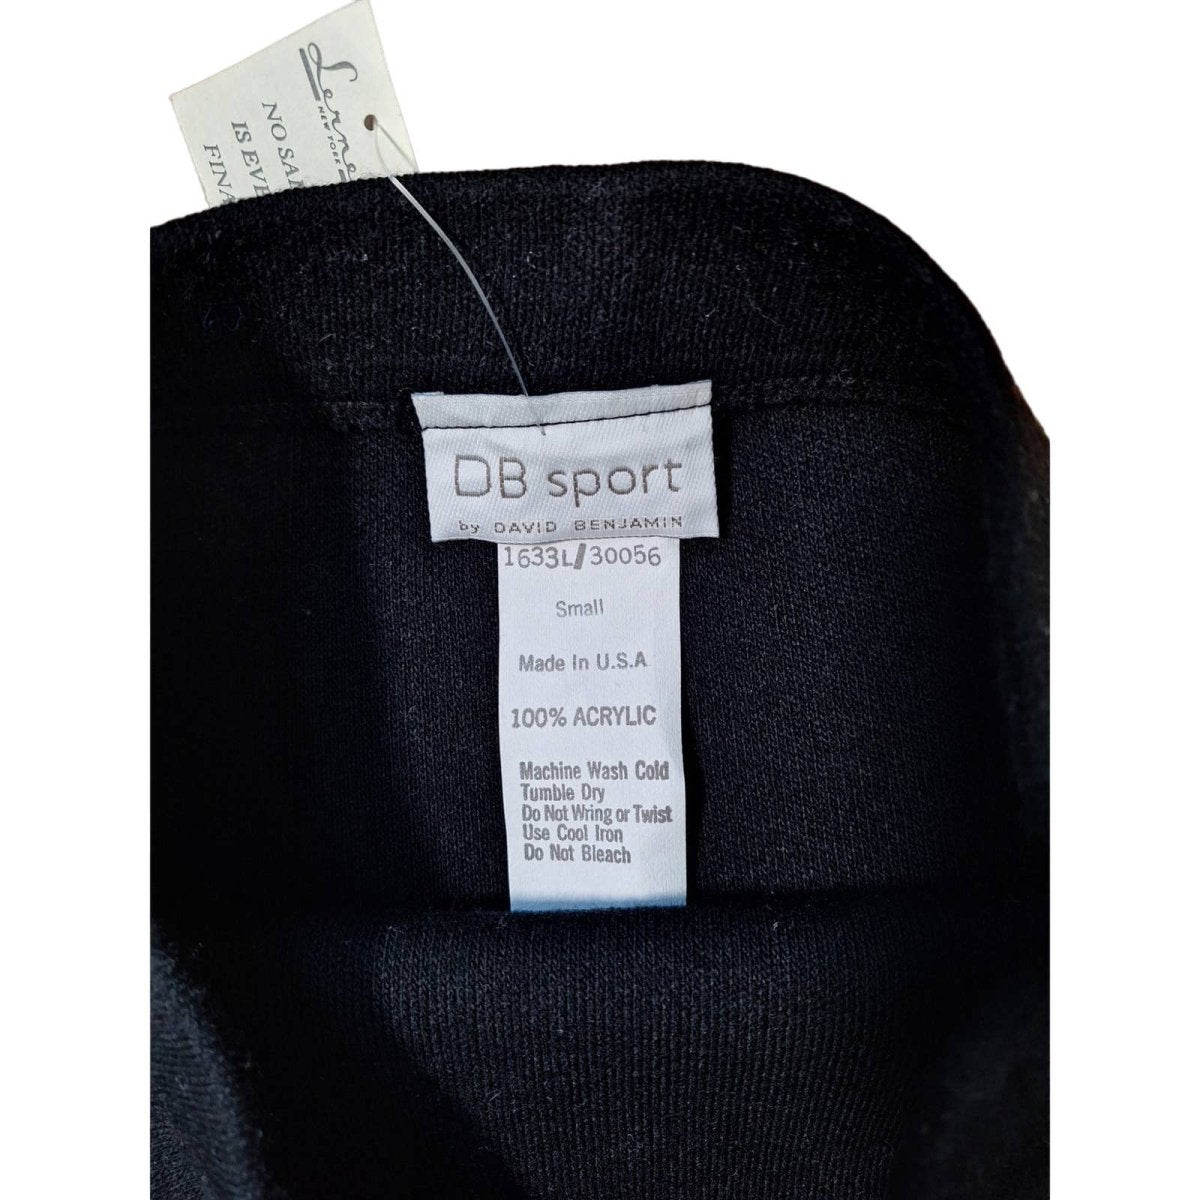 Vintage 80s Sweater Knit Black Midi/Maxi Skirt Size Small - themallvintage The Mall Vintage